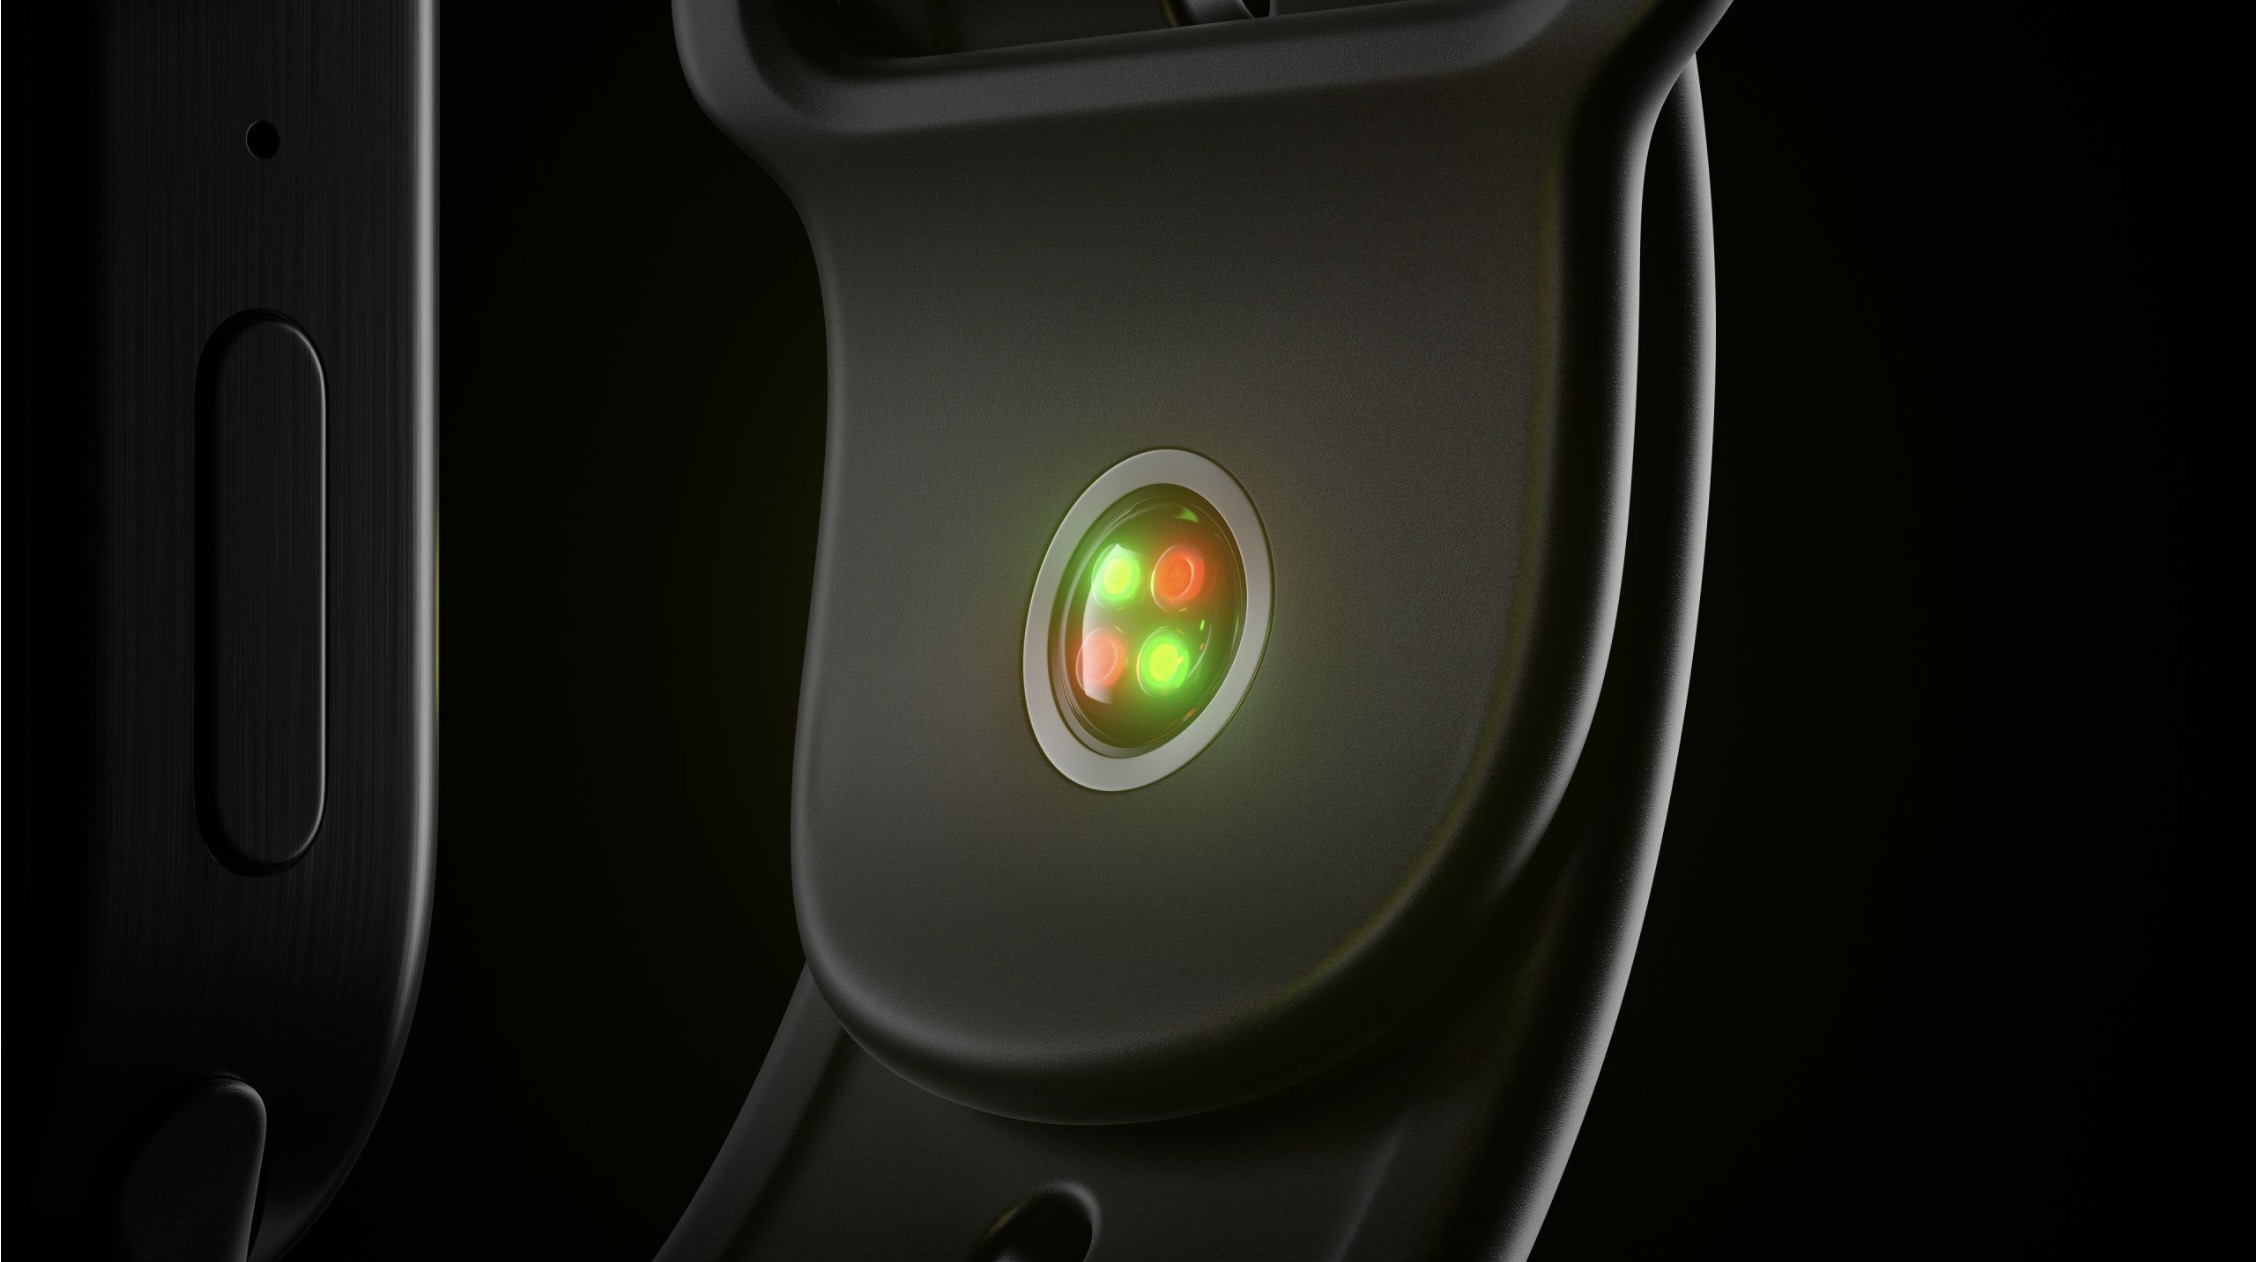 Apple Watch concept by Wordsmattr.io showing off a blood pressure sensor.